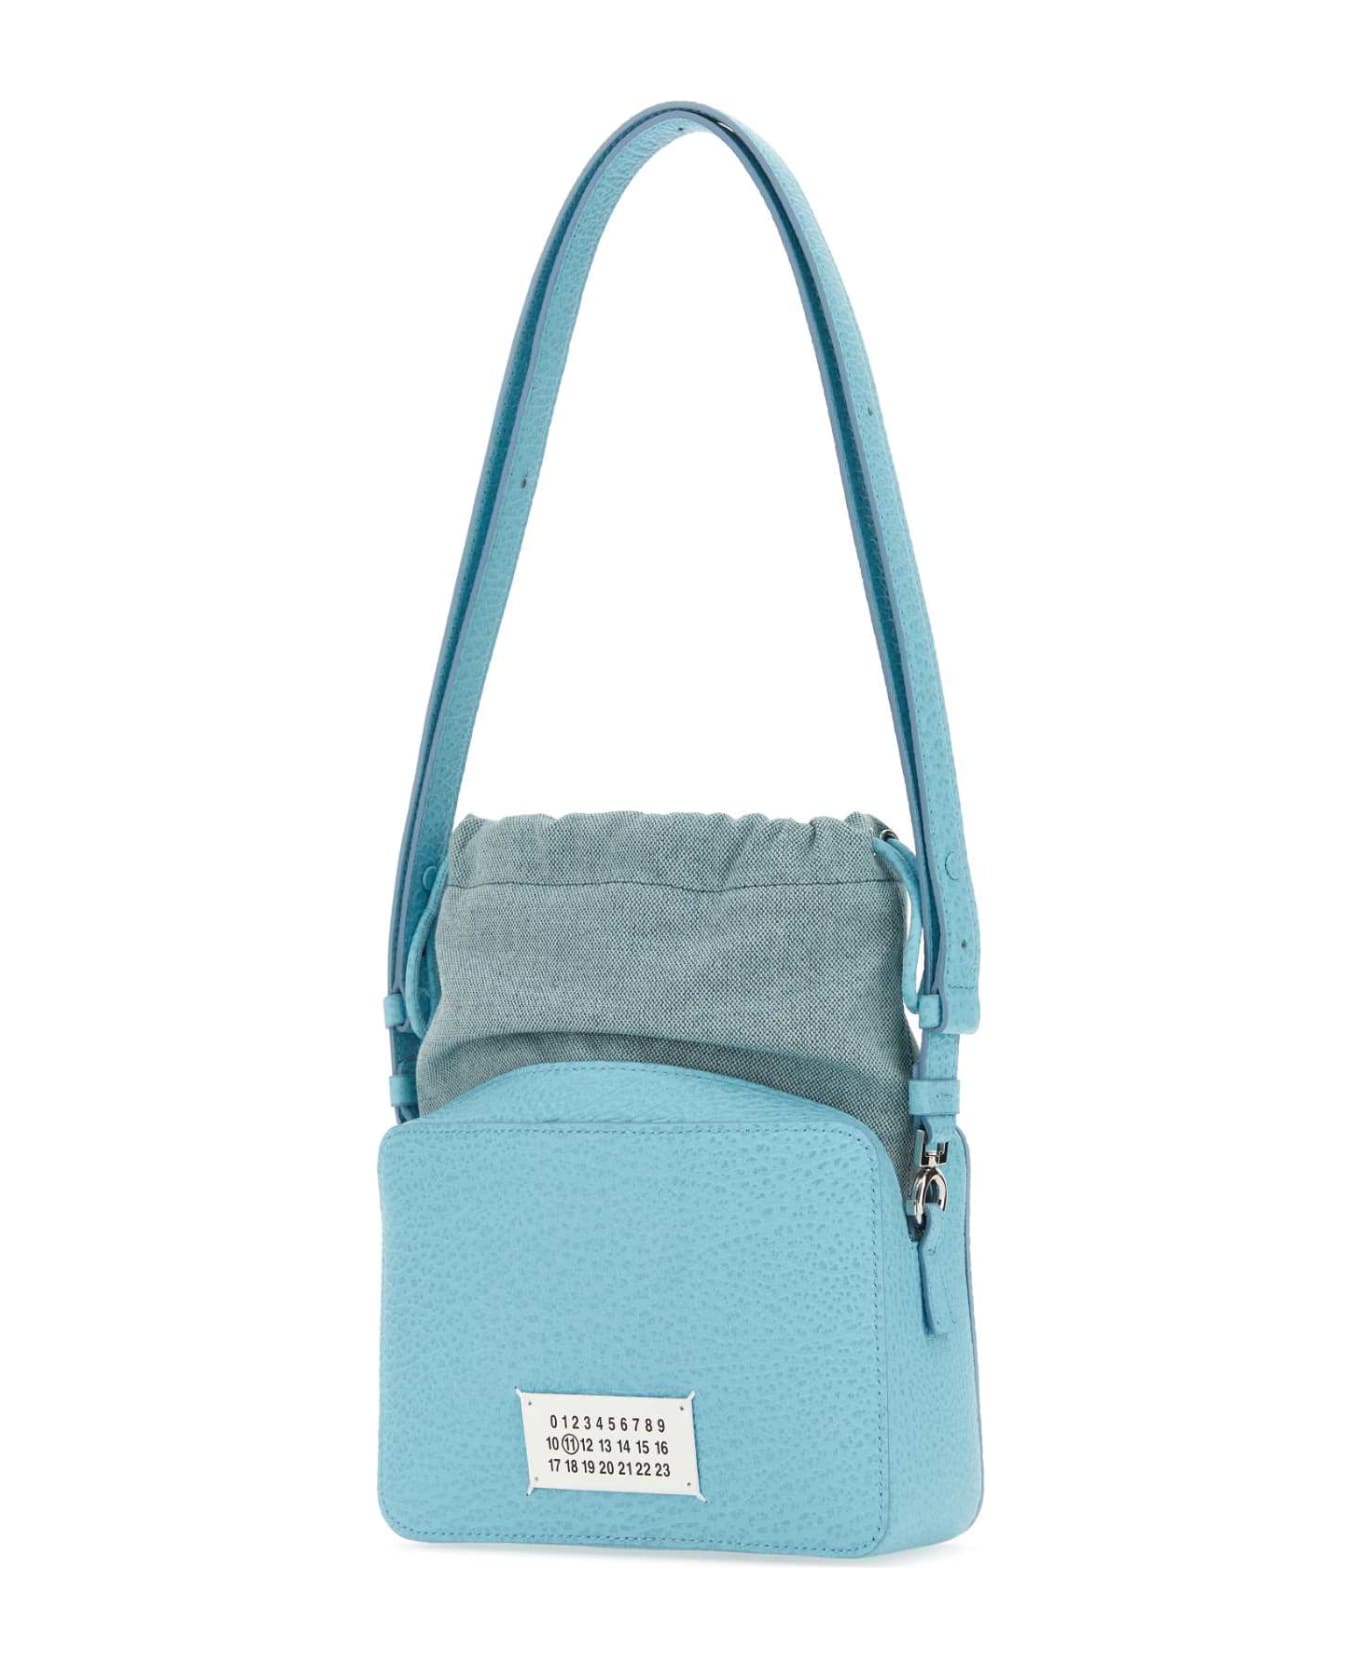 Maison Margiela Light Blue Leather And Fabric 5ac Bucket Bag - AQUA